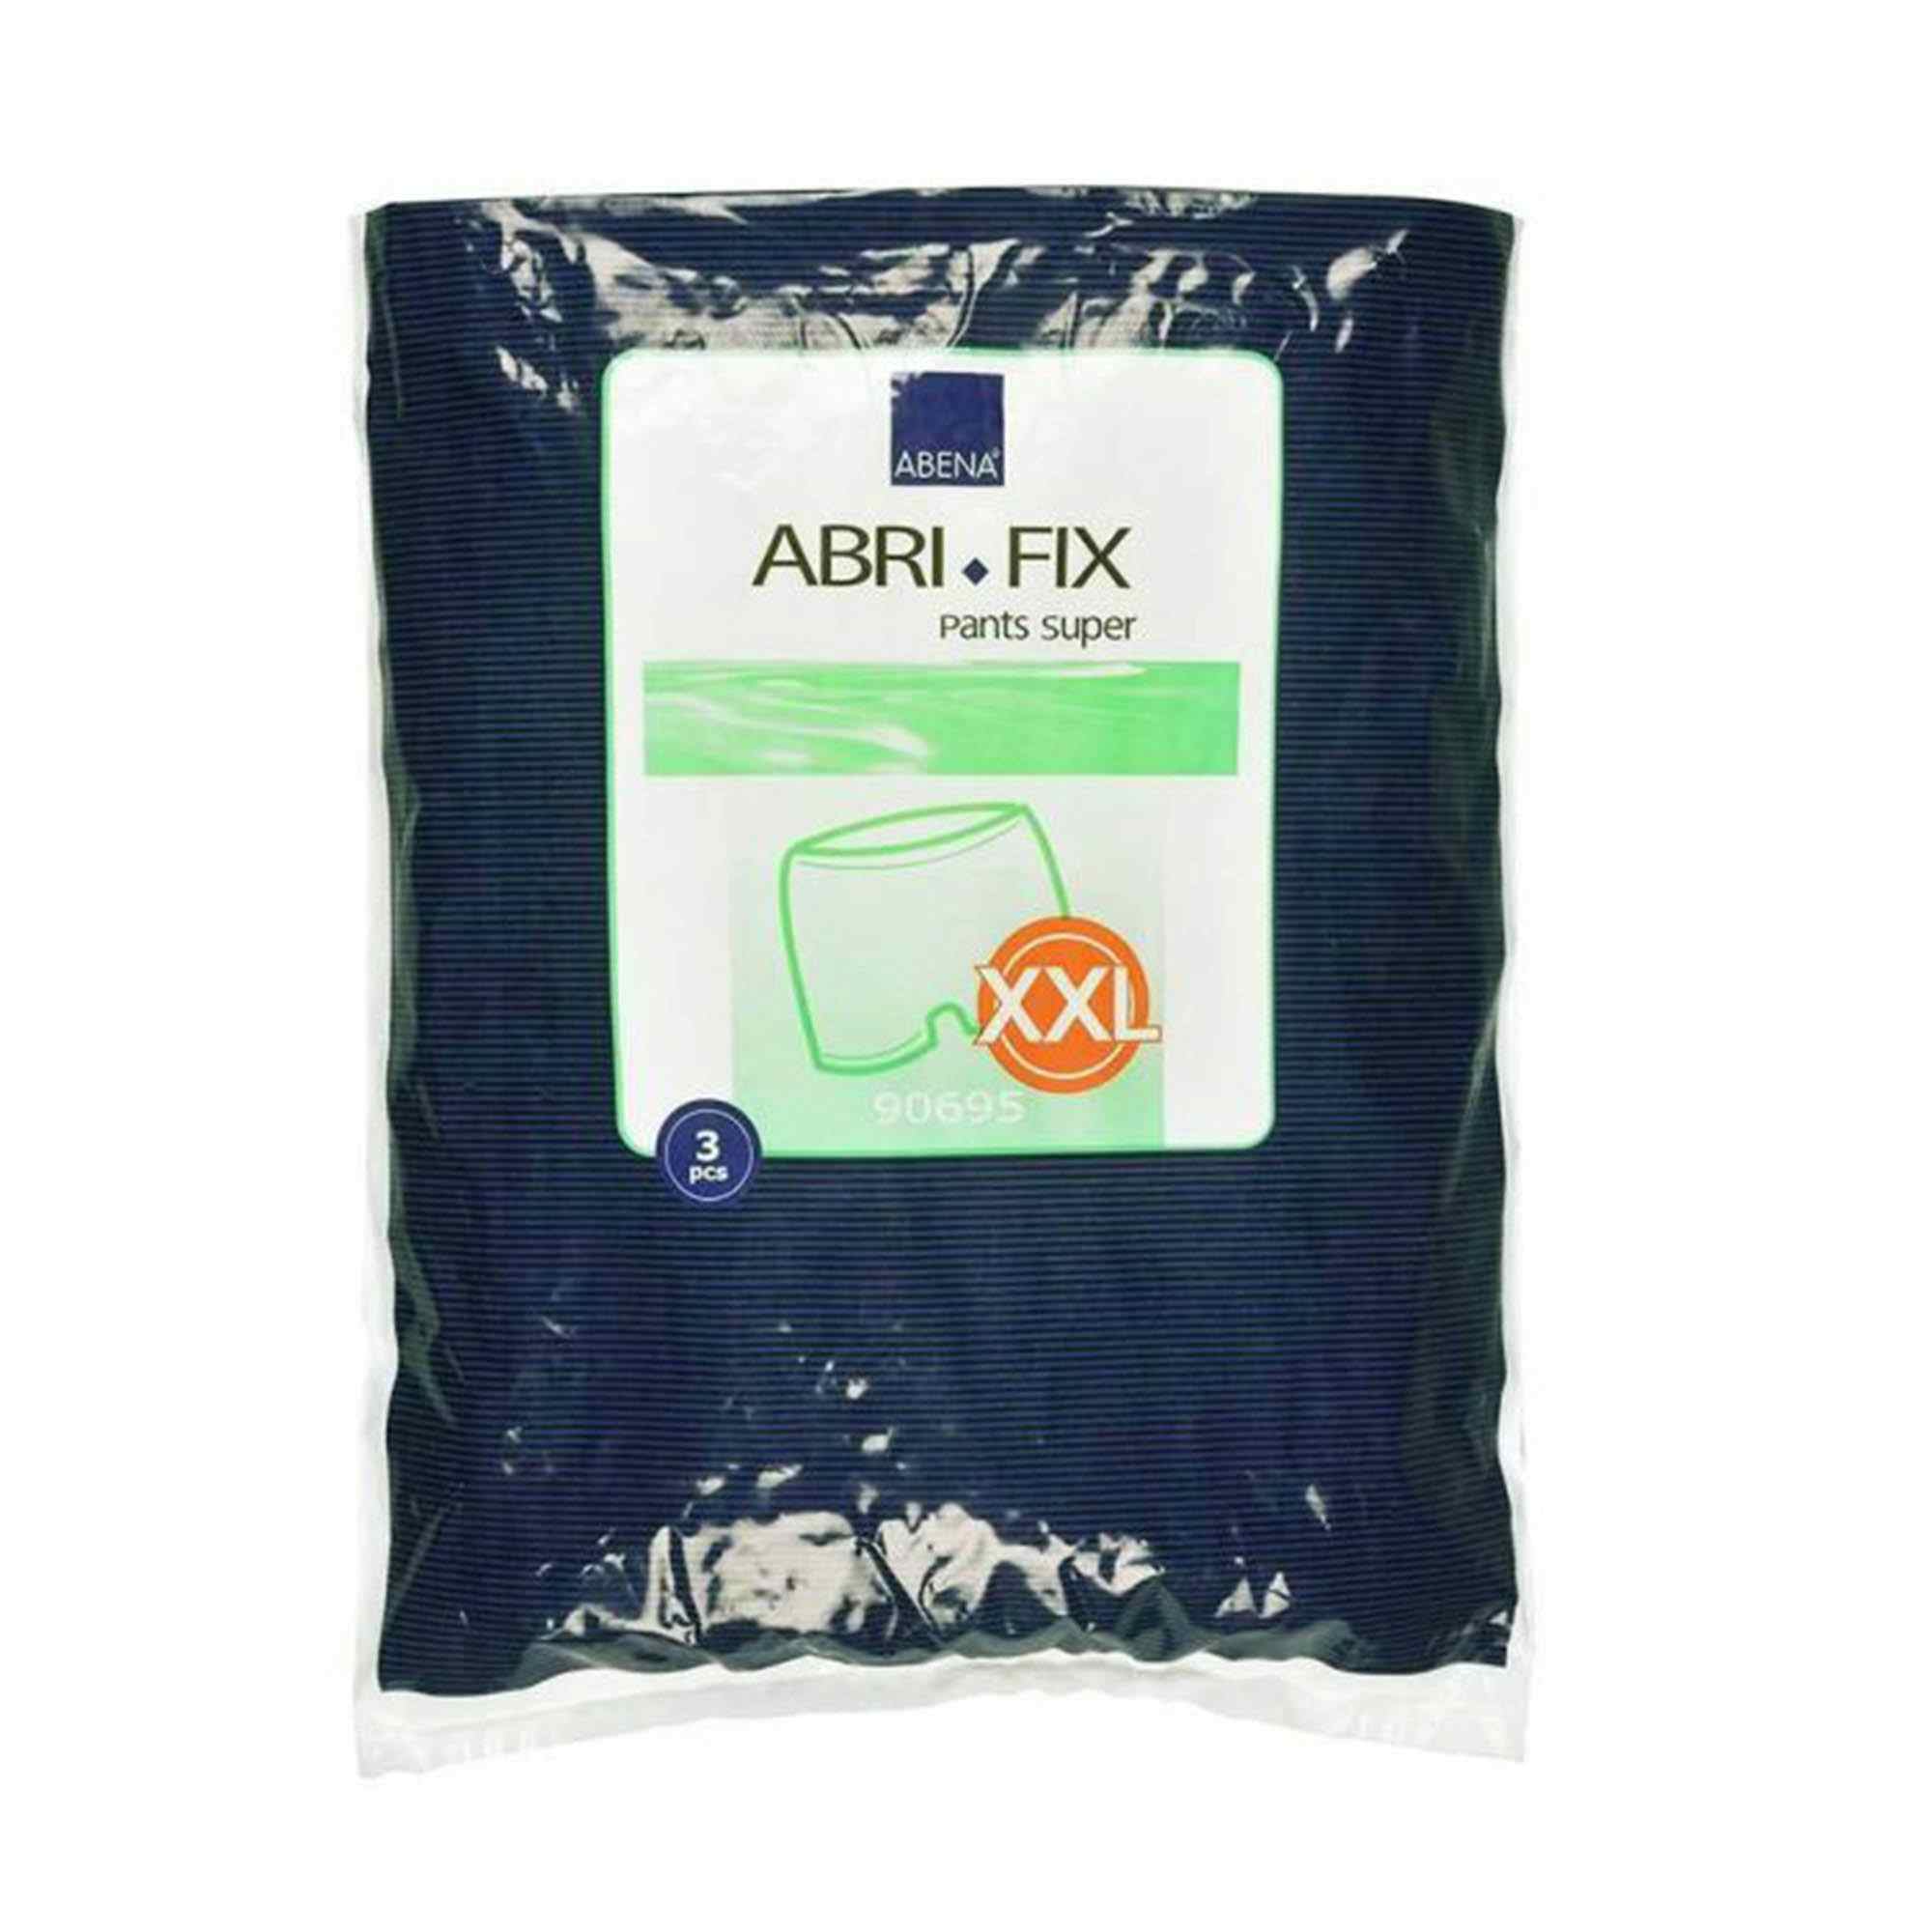 Abri-Fix Unisex Reusable Pull On Super Knit Mesh Pant